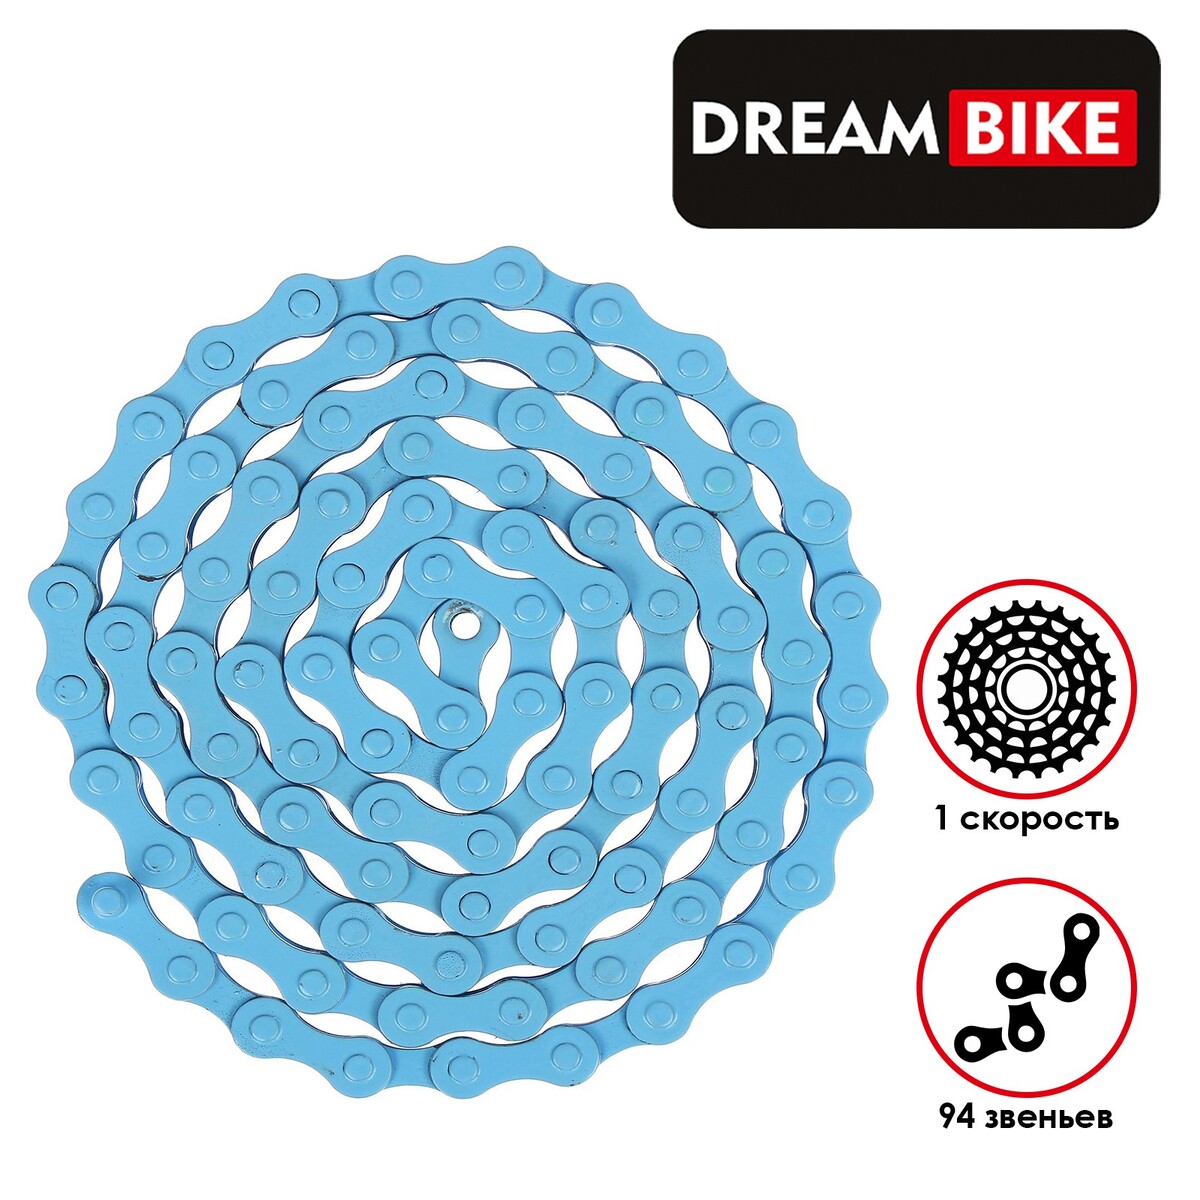 Цепь dream bike, 1 скорость, цвет синий замок цепи dream bike для односкоростных цепей